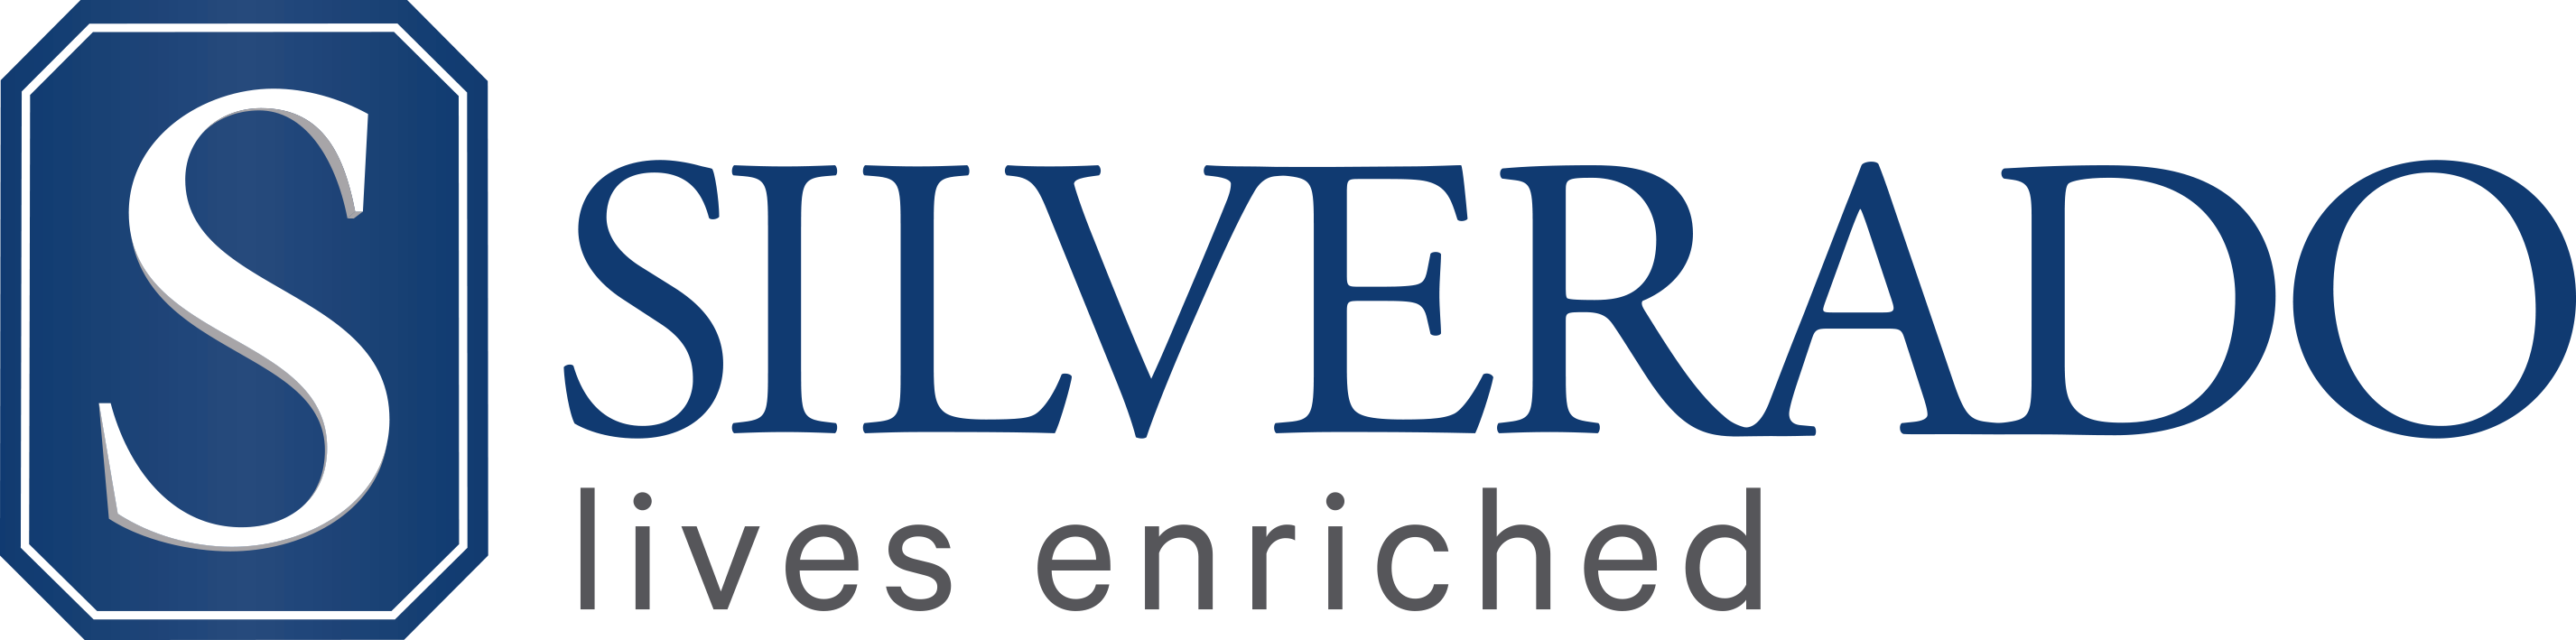 Silverado Senior Living logo